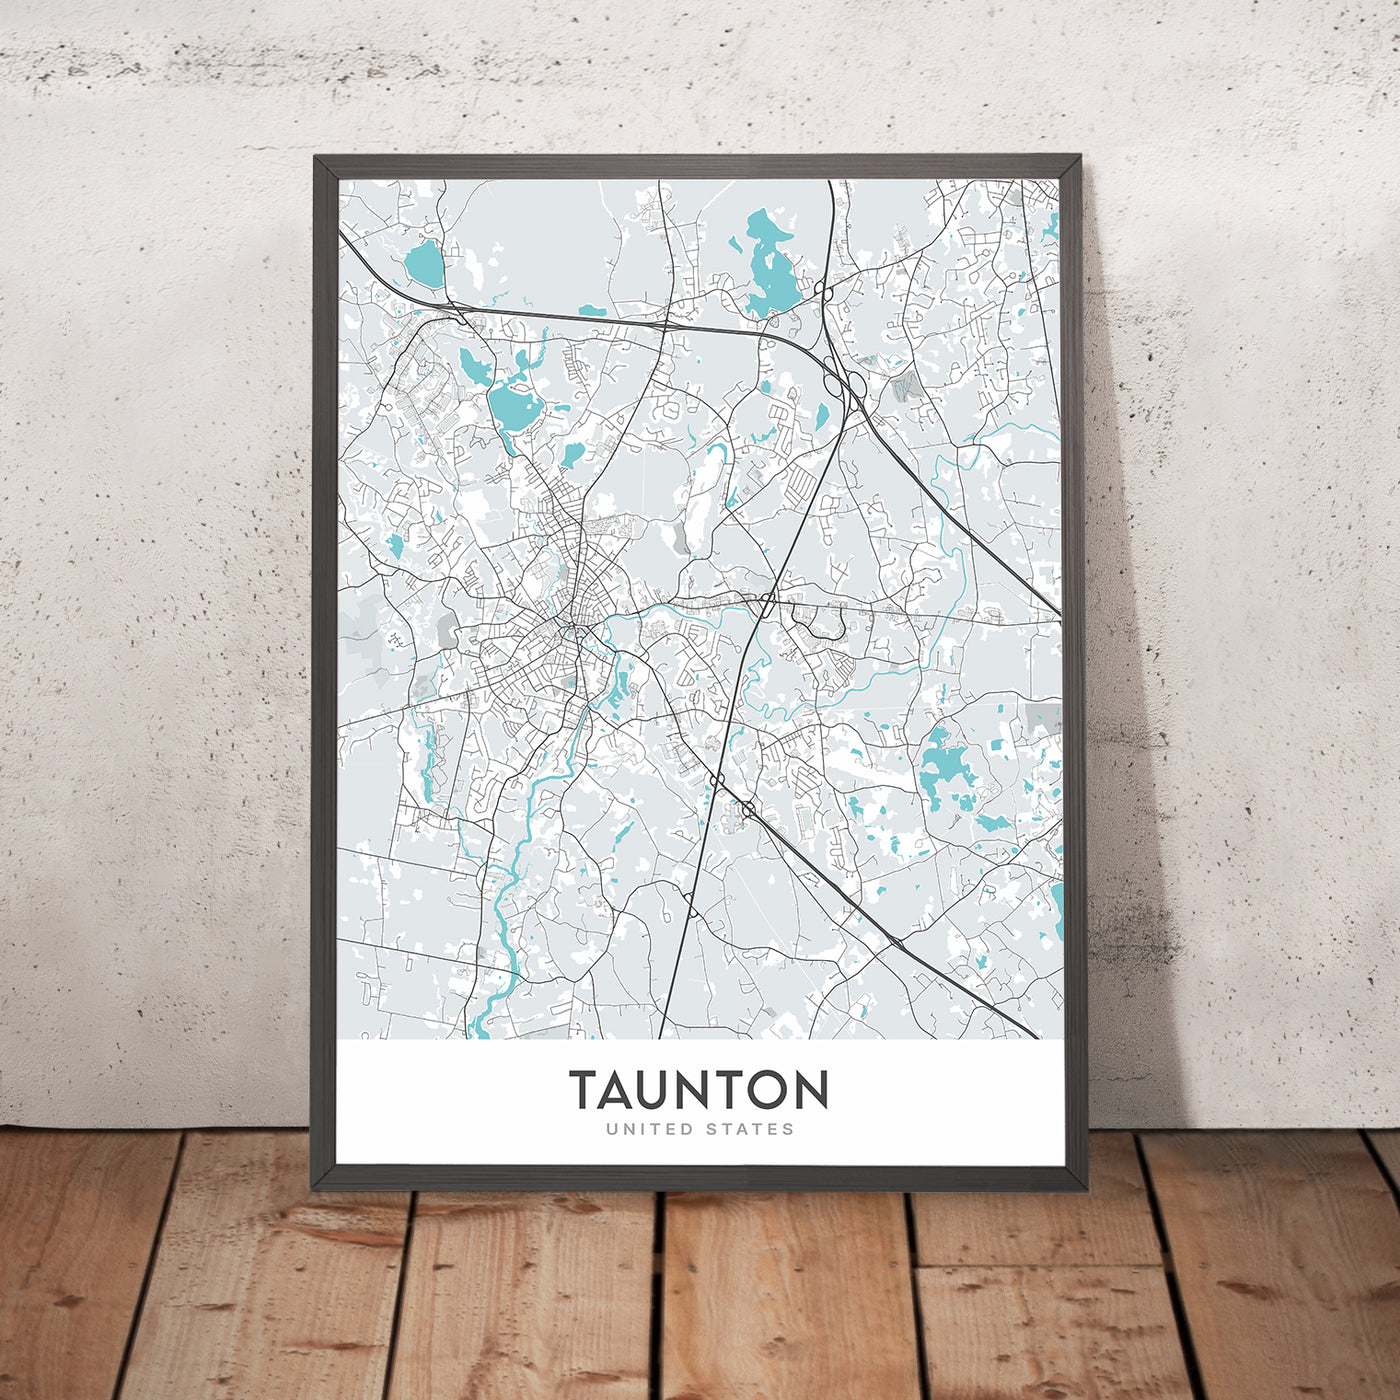 Moderner Stadtplan von Taunton, MA: Innenstadt, Old Colony Historical Society, Taunton Green, Taunton Public Library, Whittenton